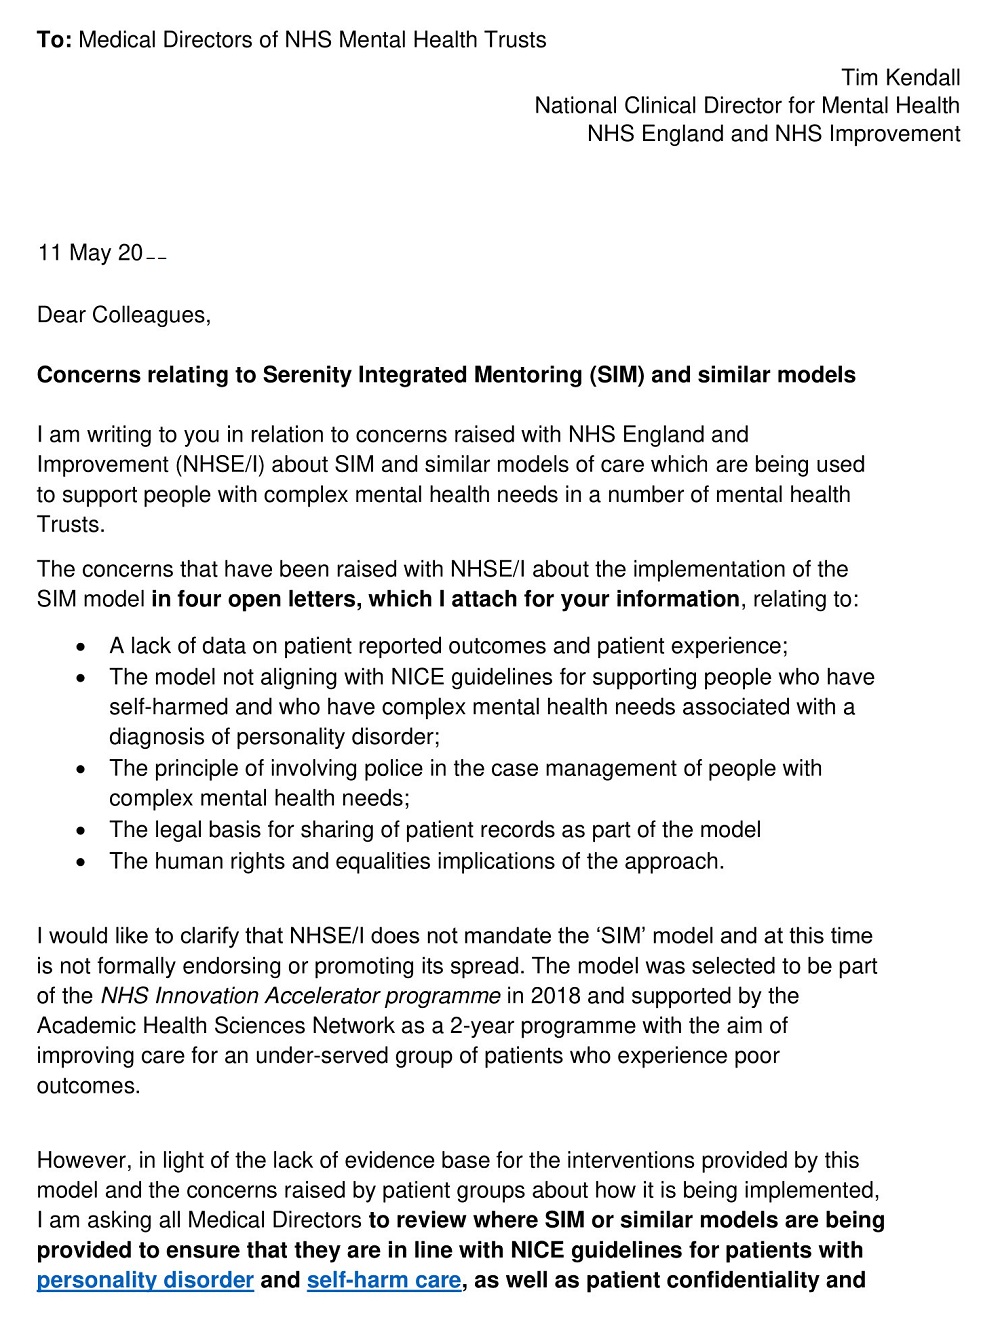 Medical Directors of NHS Mental Health Trusts Letter